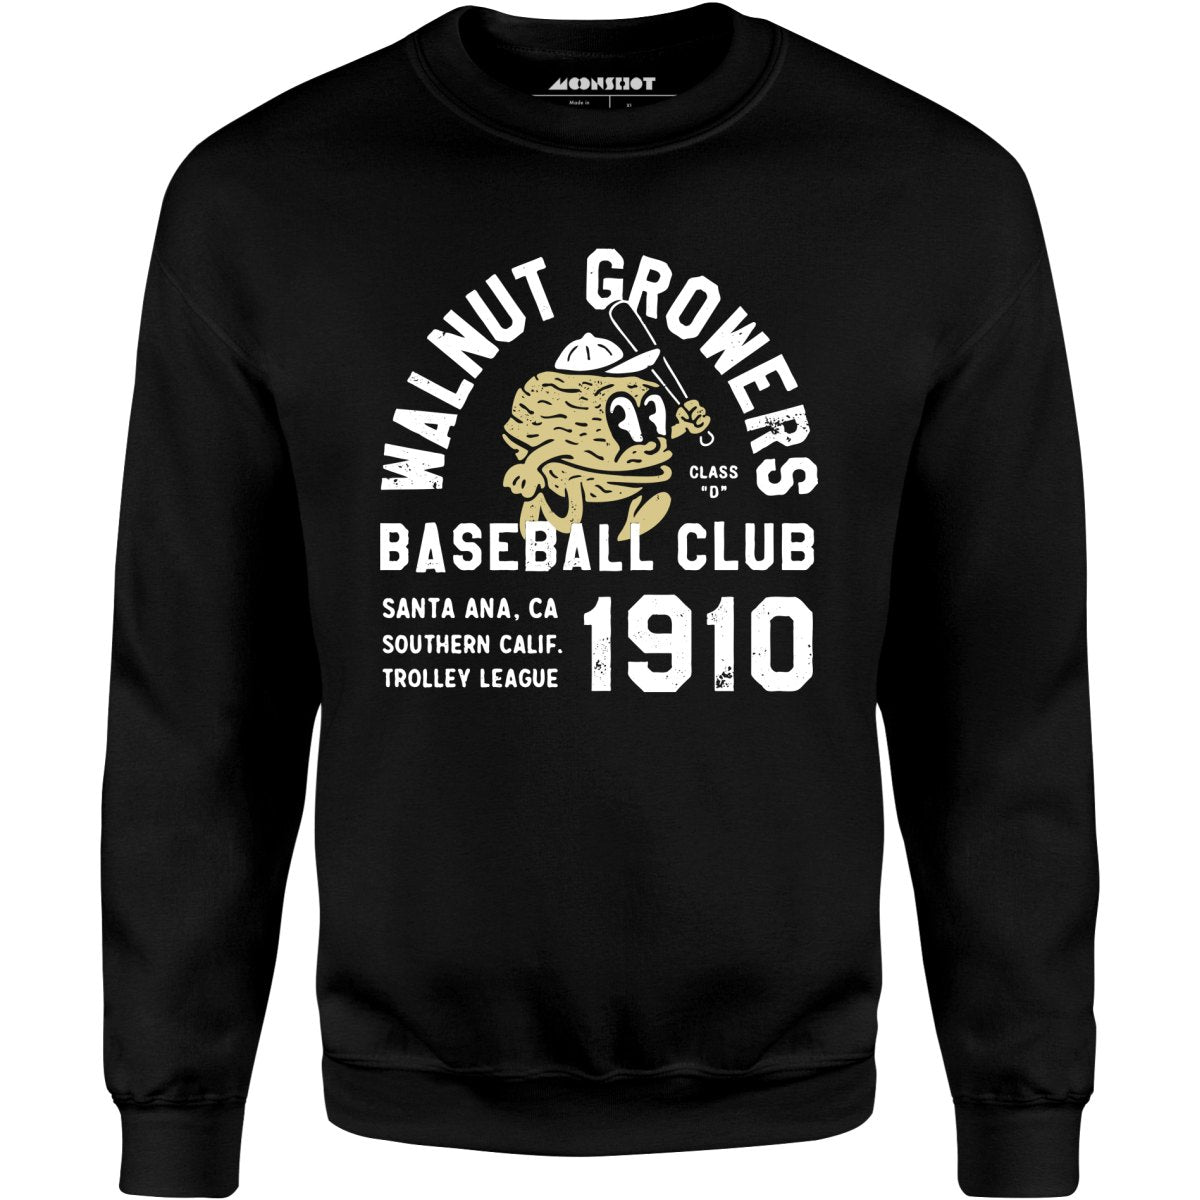 Santa Ana Walnut Growers - California - Vintage Defunct Baseball Teams - Unisex Sweatshirt